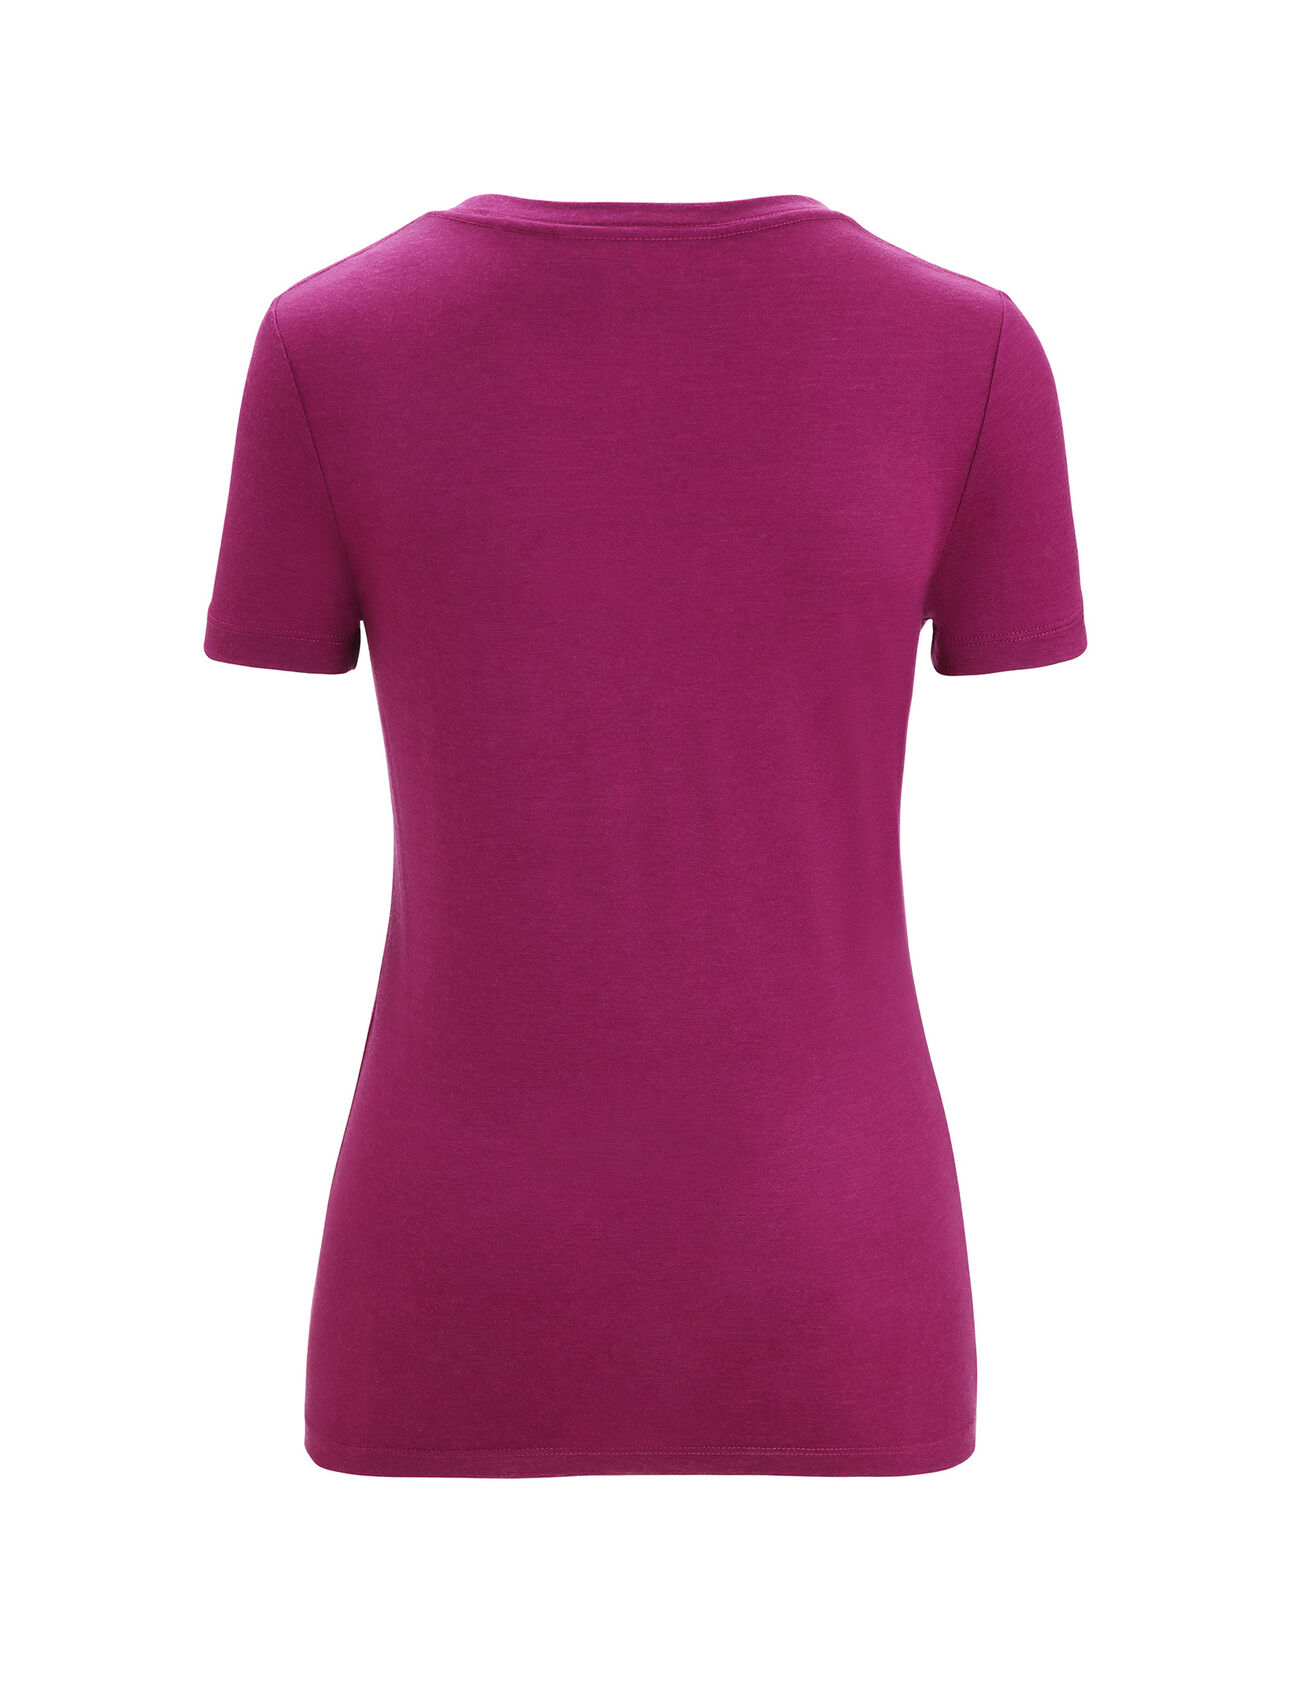 Endurance Collection Seamless T-Shirt mauve – Fitico Sportswear